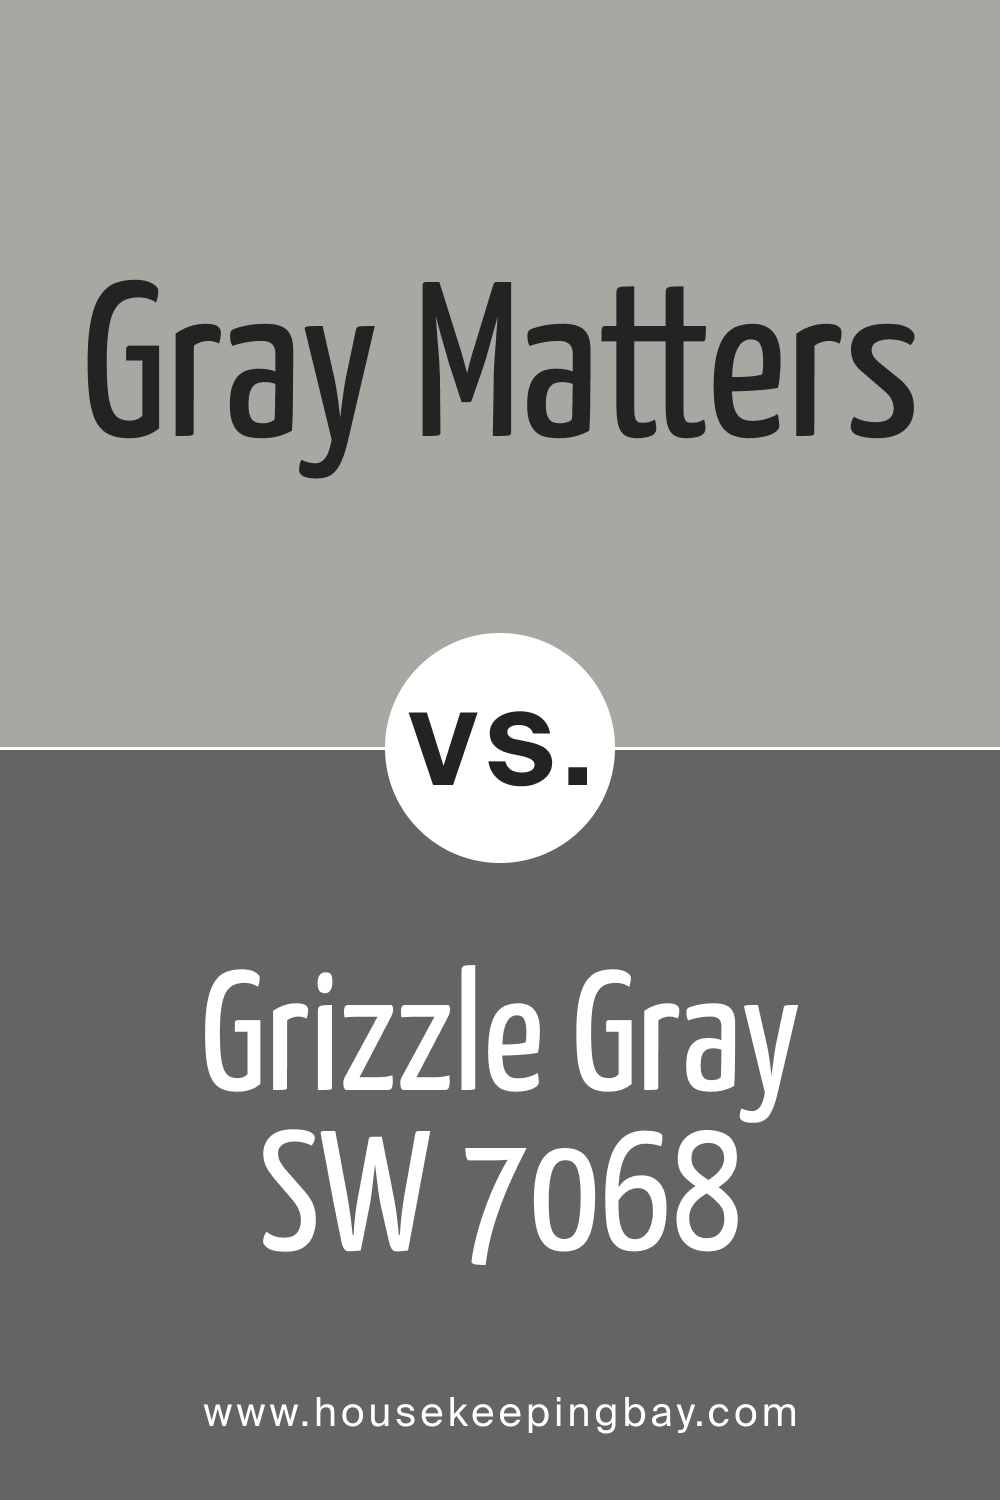 Gray Matters SW 7066 vs Grizzle Gray SW 7068